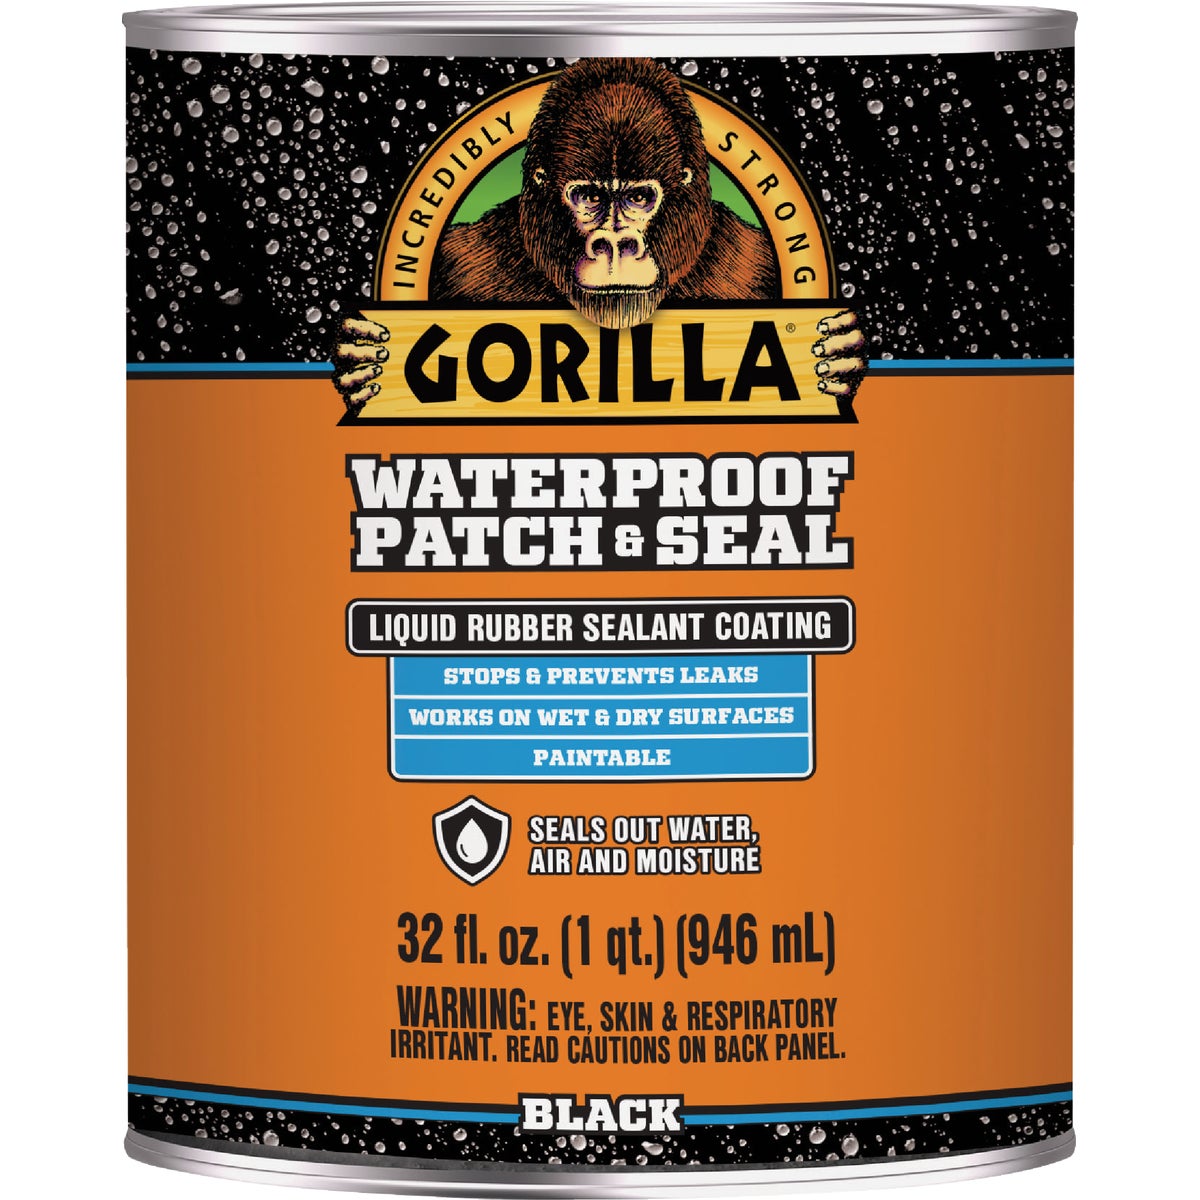 Gorilla 32 Oz. Black Waterproof Patch & Seal Liquid